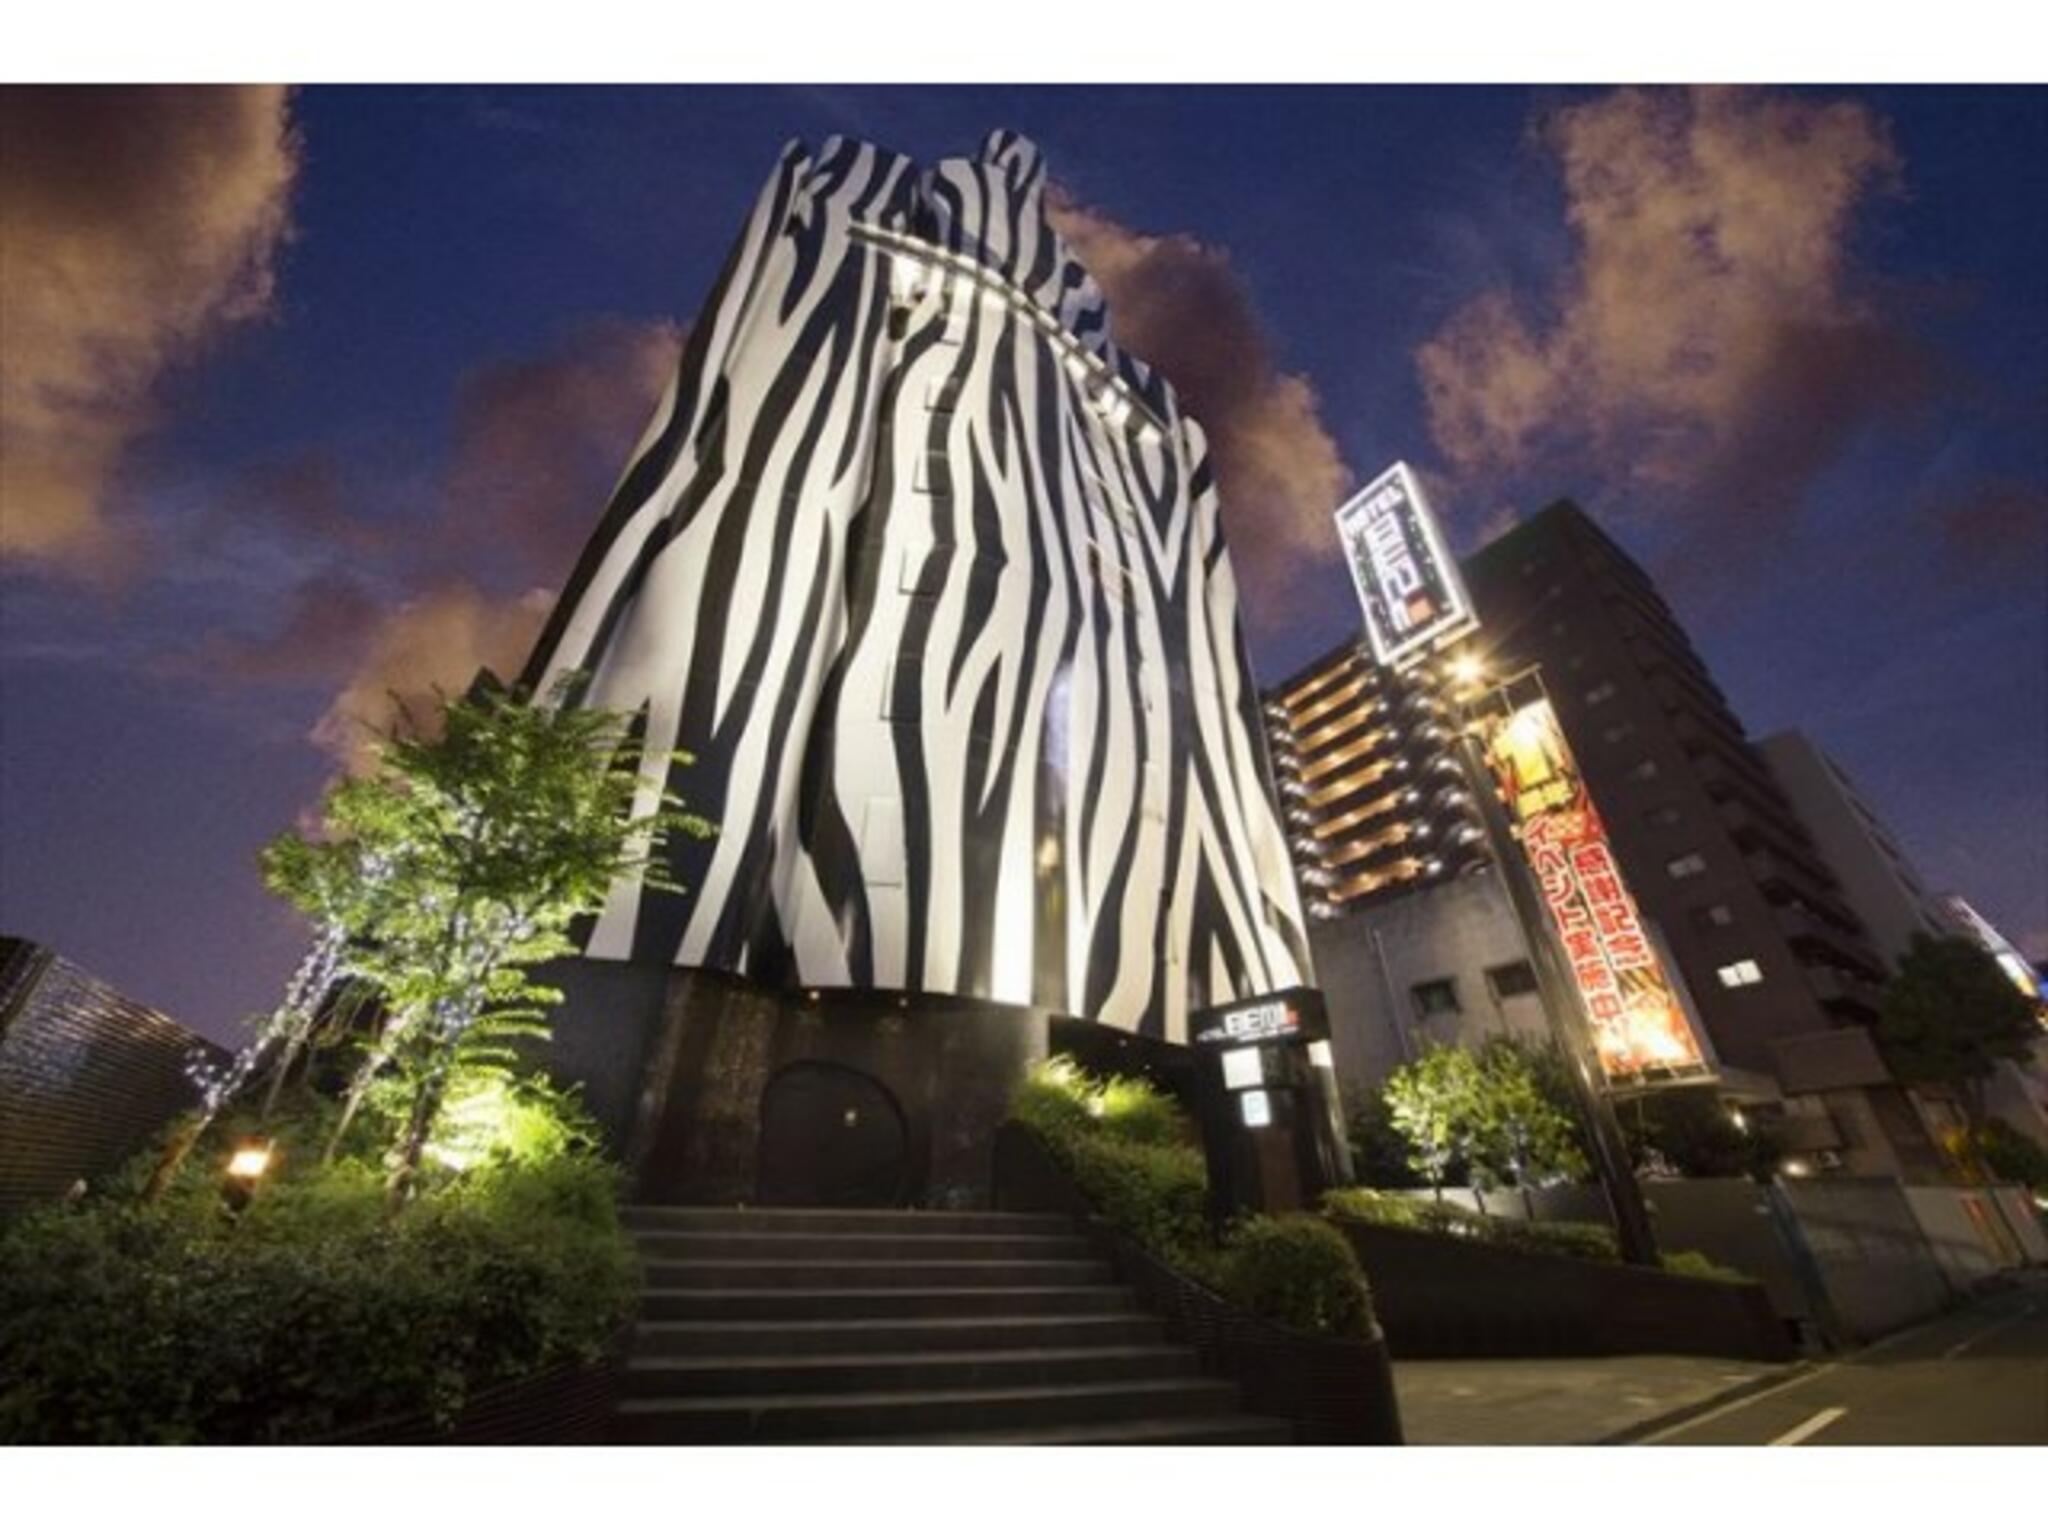 HOTEL BENI 東三国 (ホテル ベニ ヒガシミクニ)の代表写真1